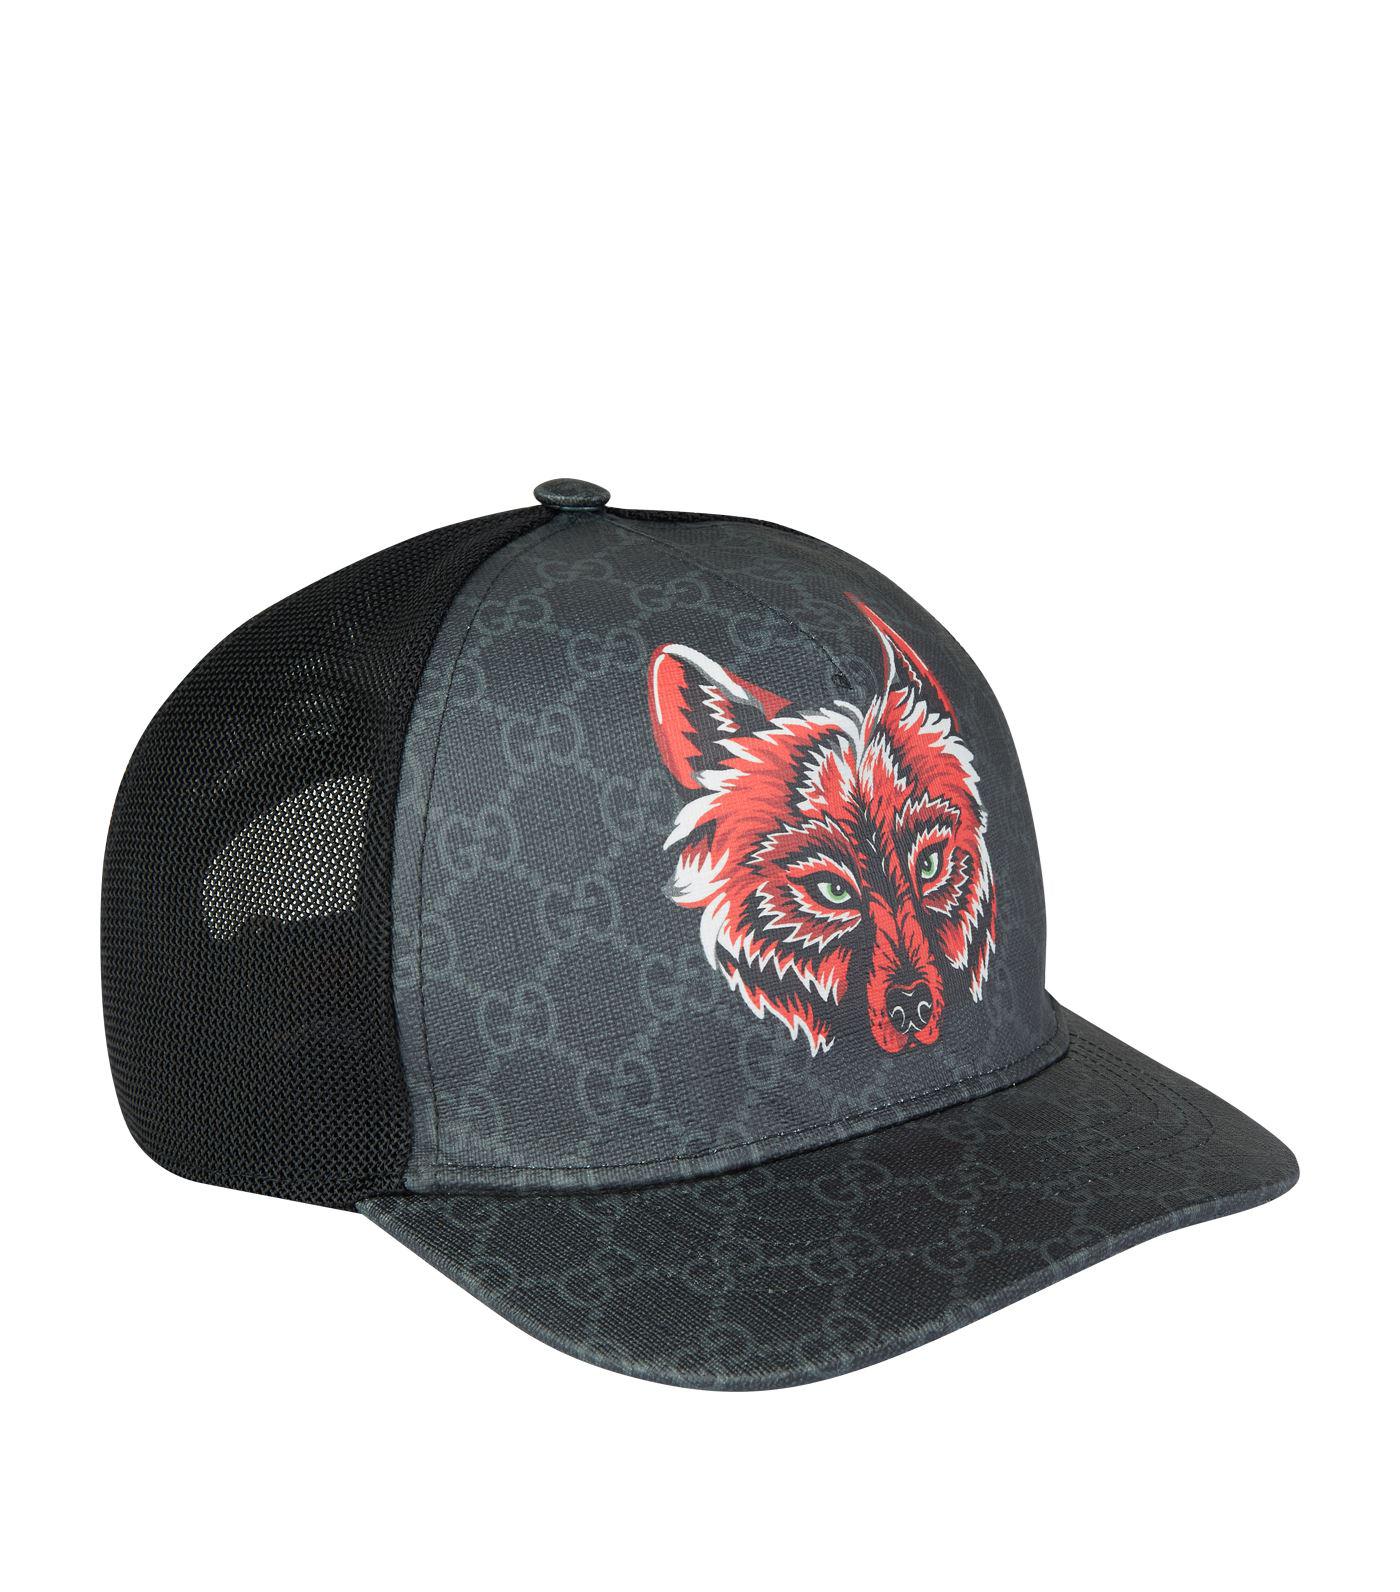 Men's Wolf Head GG-Supreme Baseball Cap in Black for Lyst